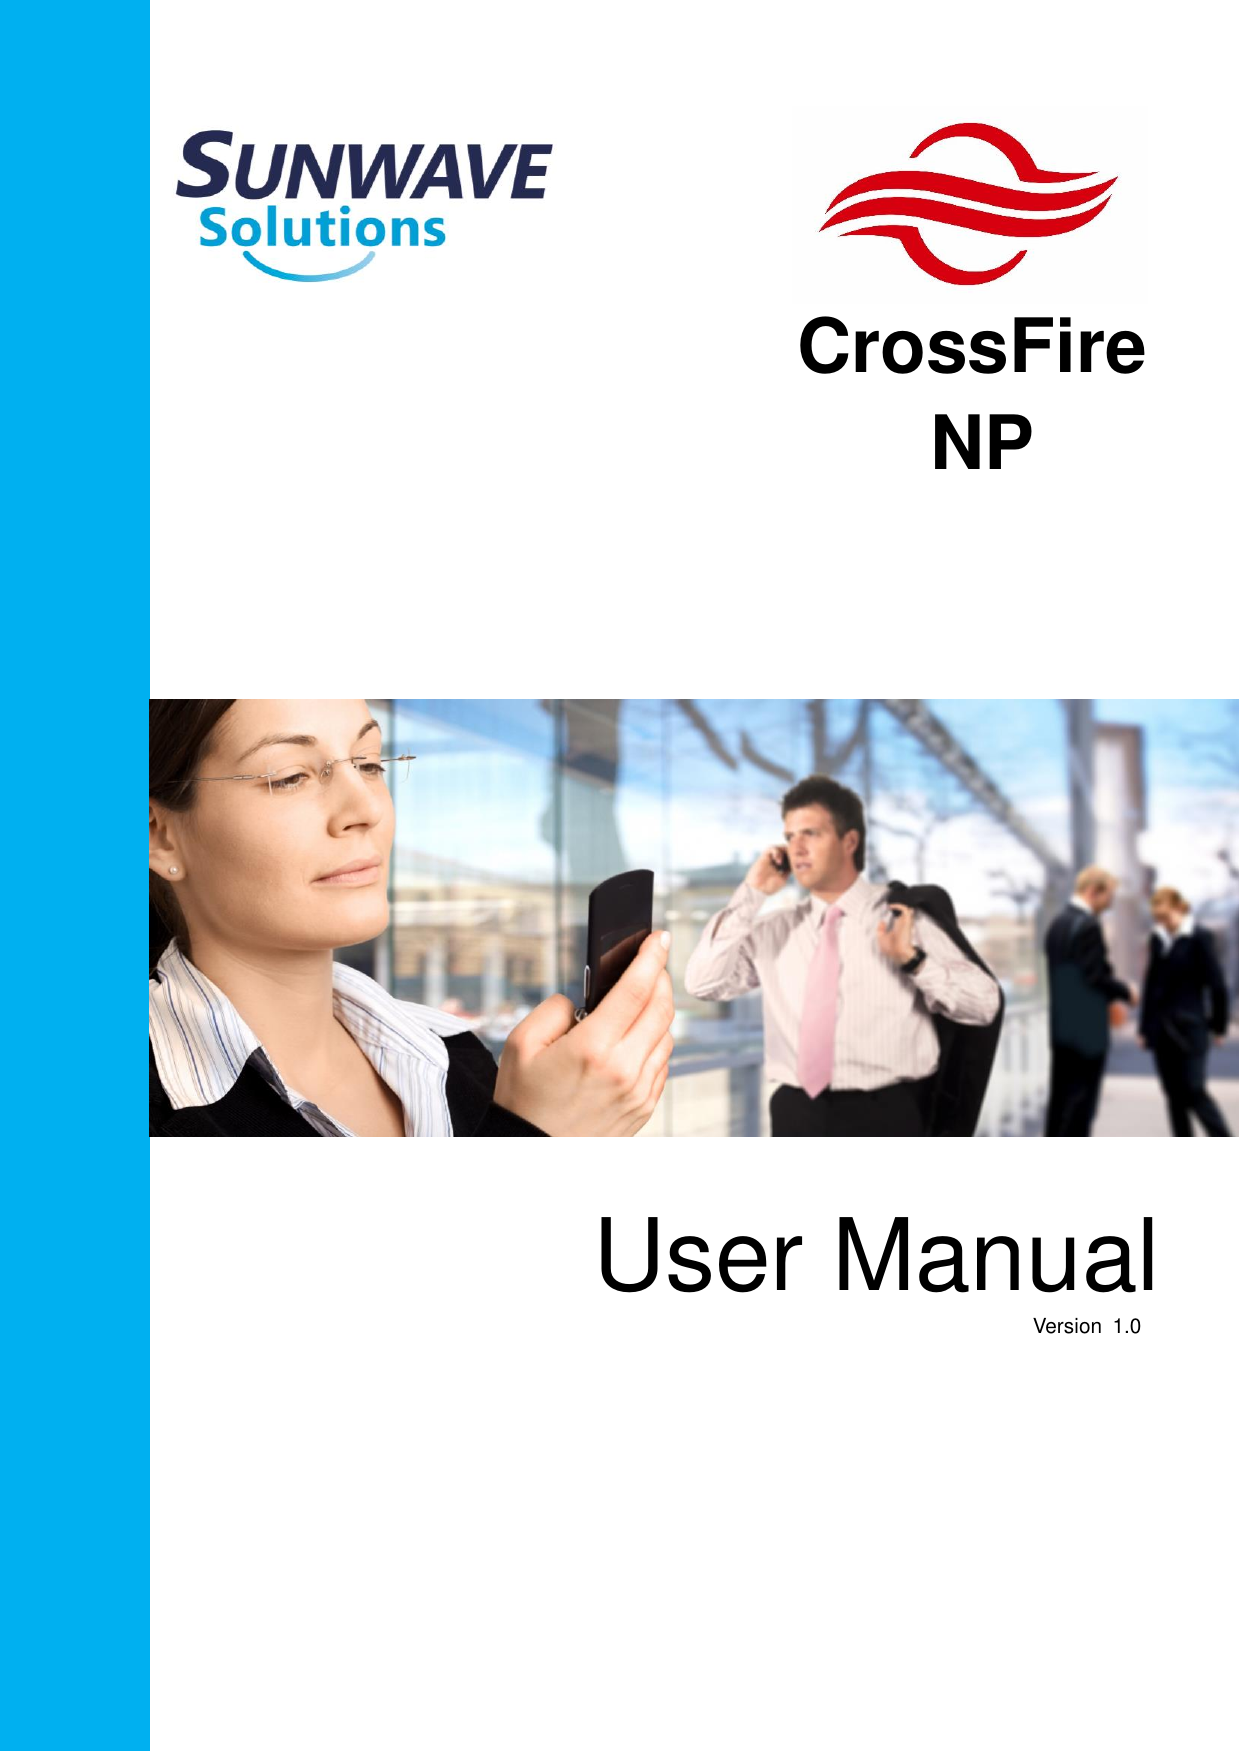                                                                                     CrossFire   NP                                                        User Manual Version  1.0   